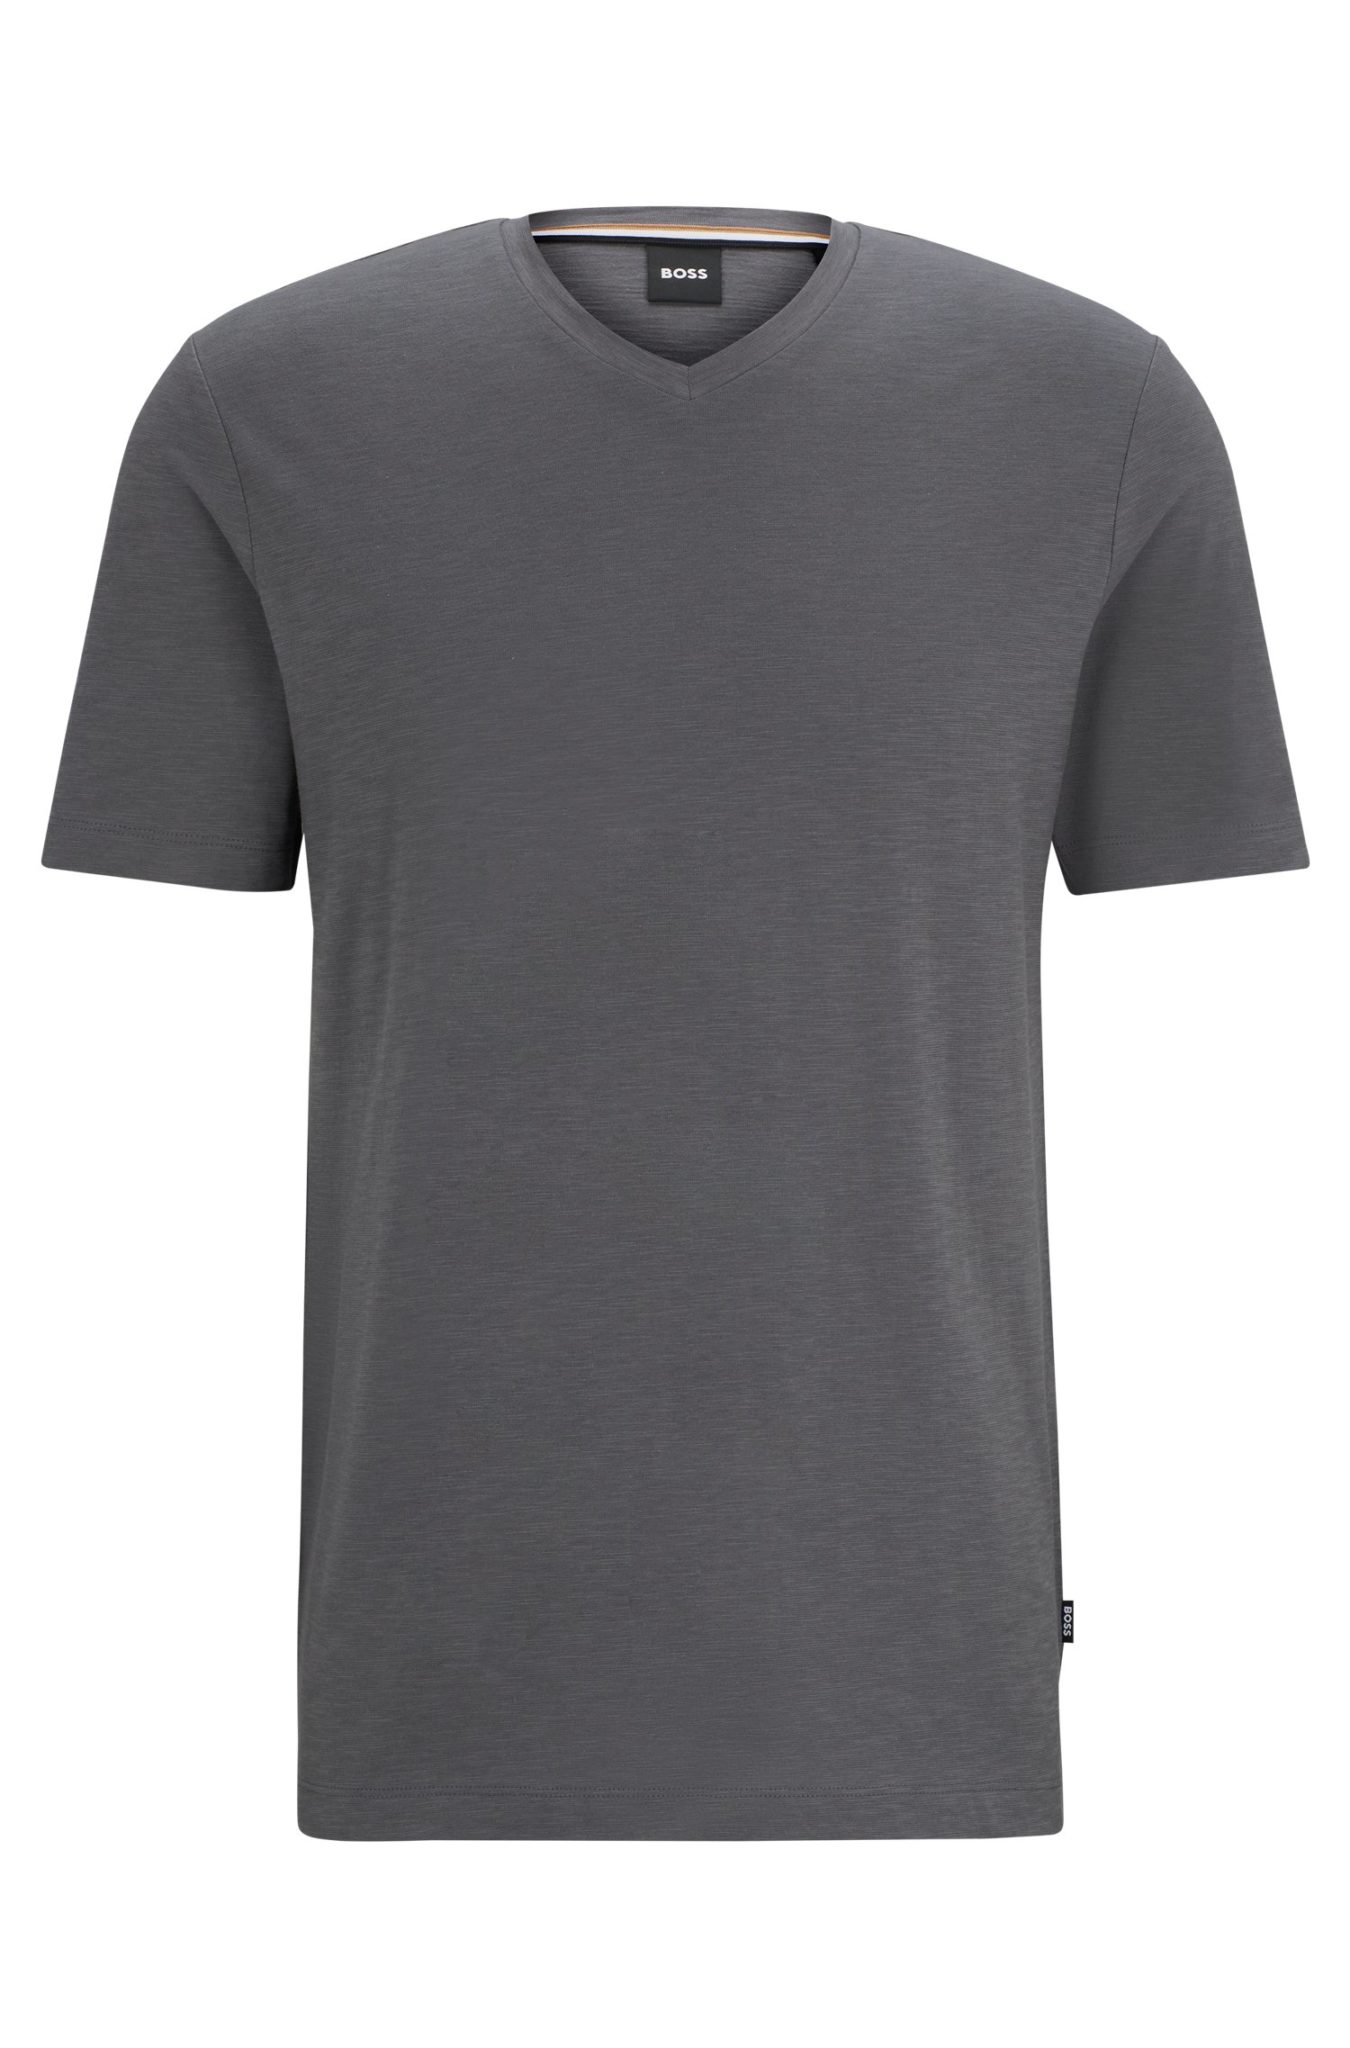 Hugo Boss T-shirt en coton mercerisé avec col V